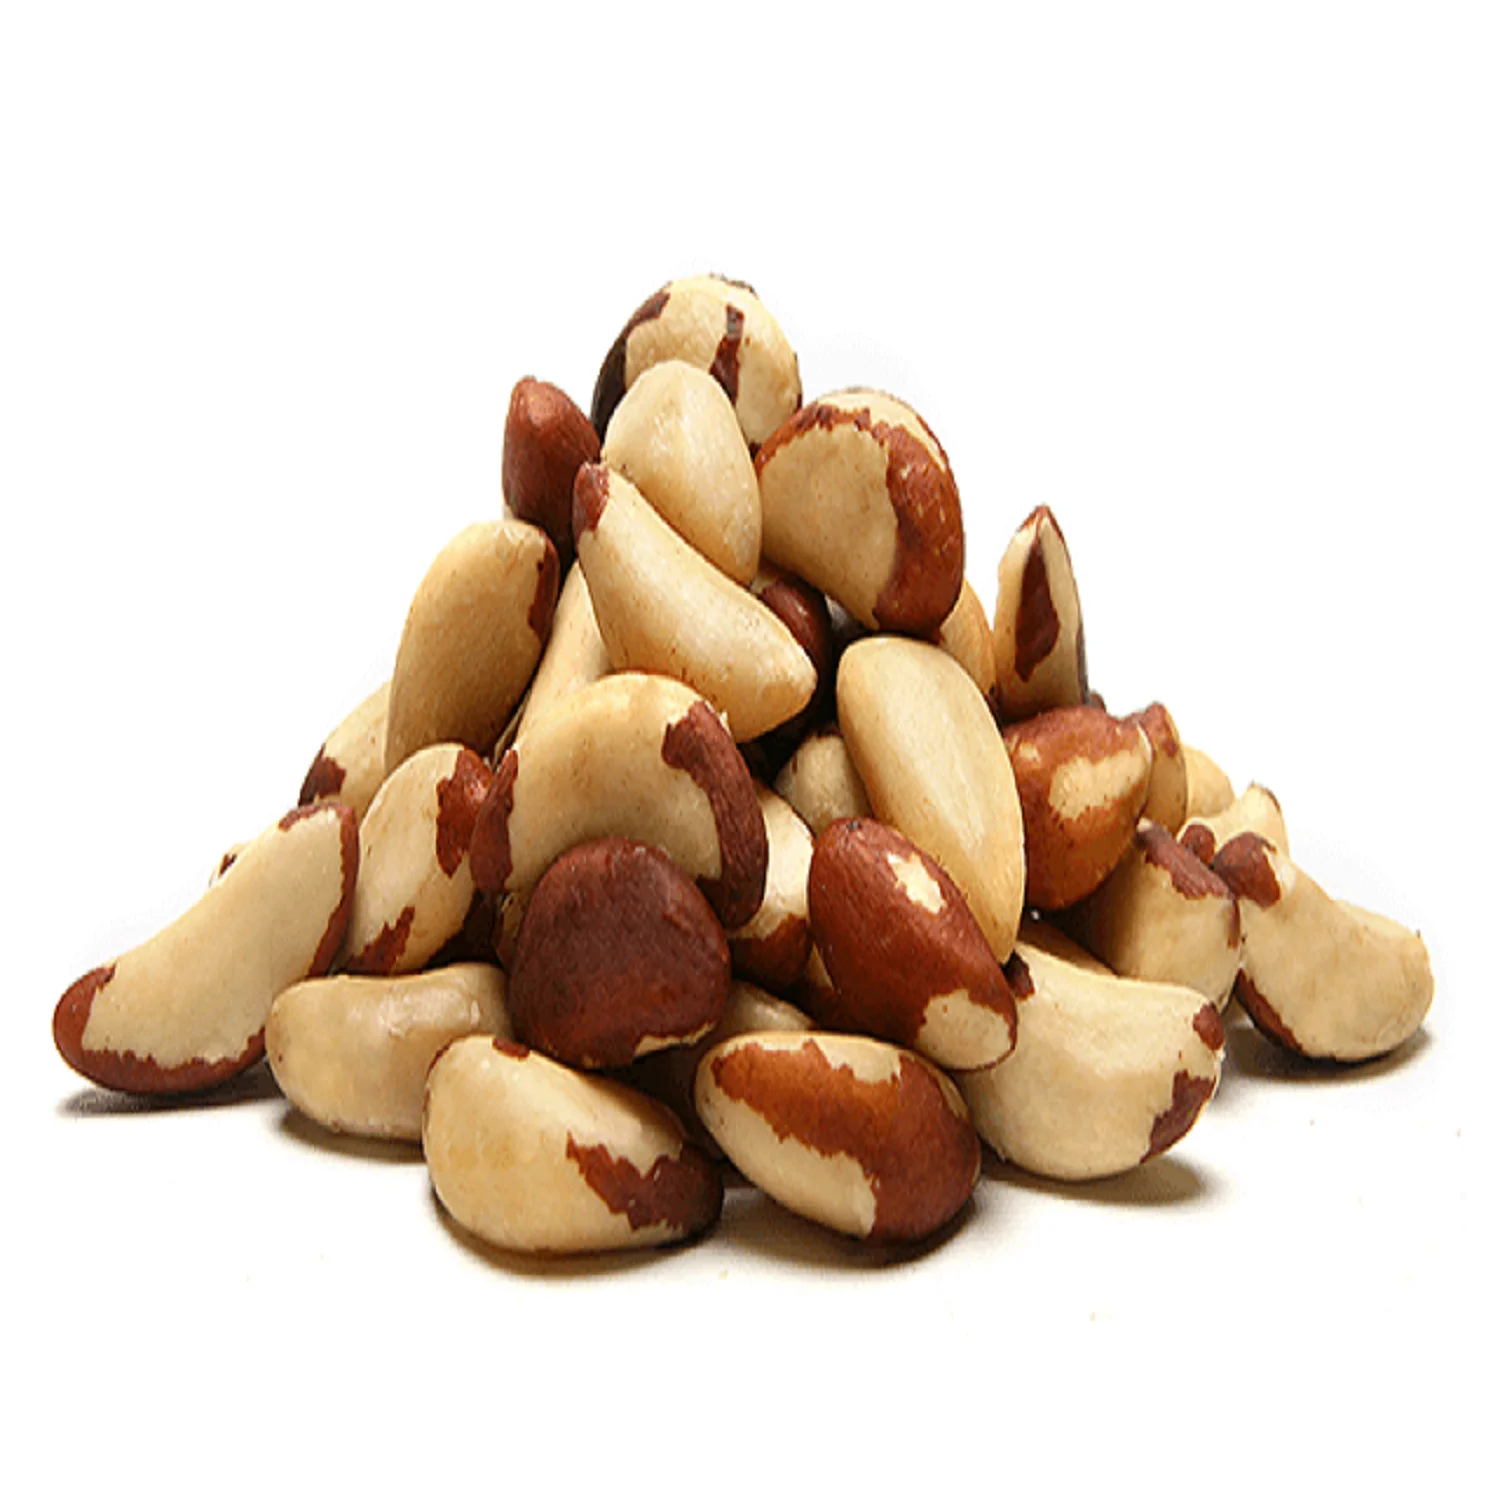 Organic Brazil Nuts / Brazil Nuts Wholesale price